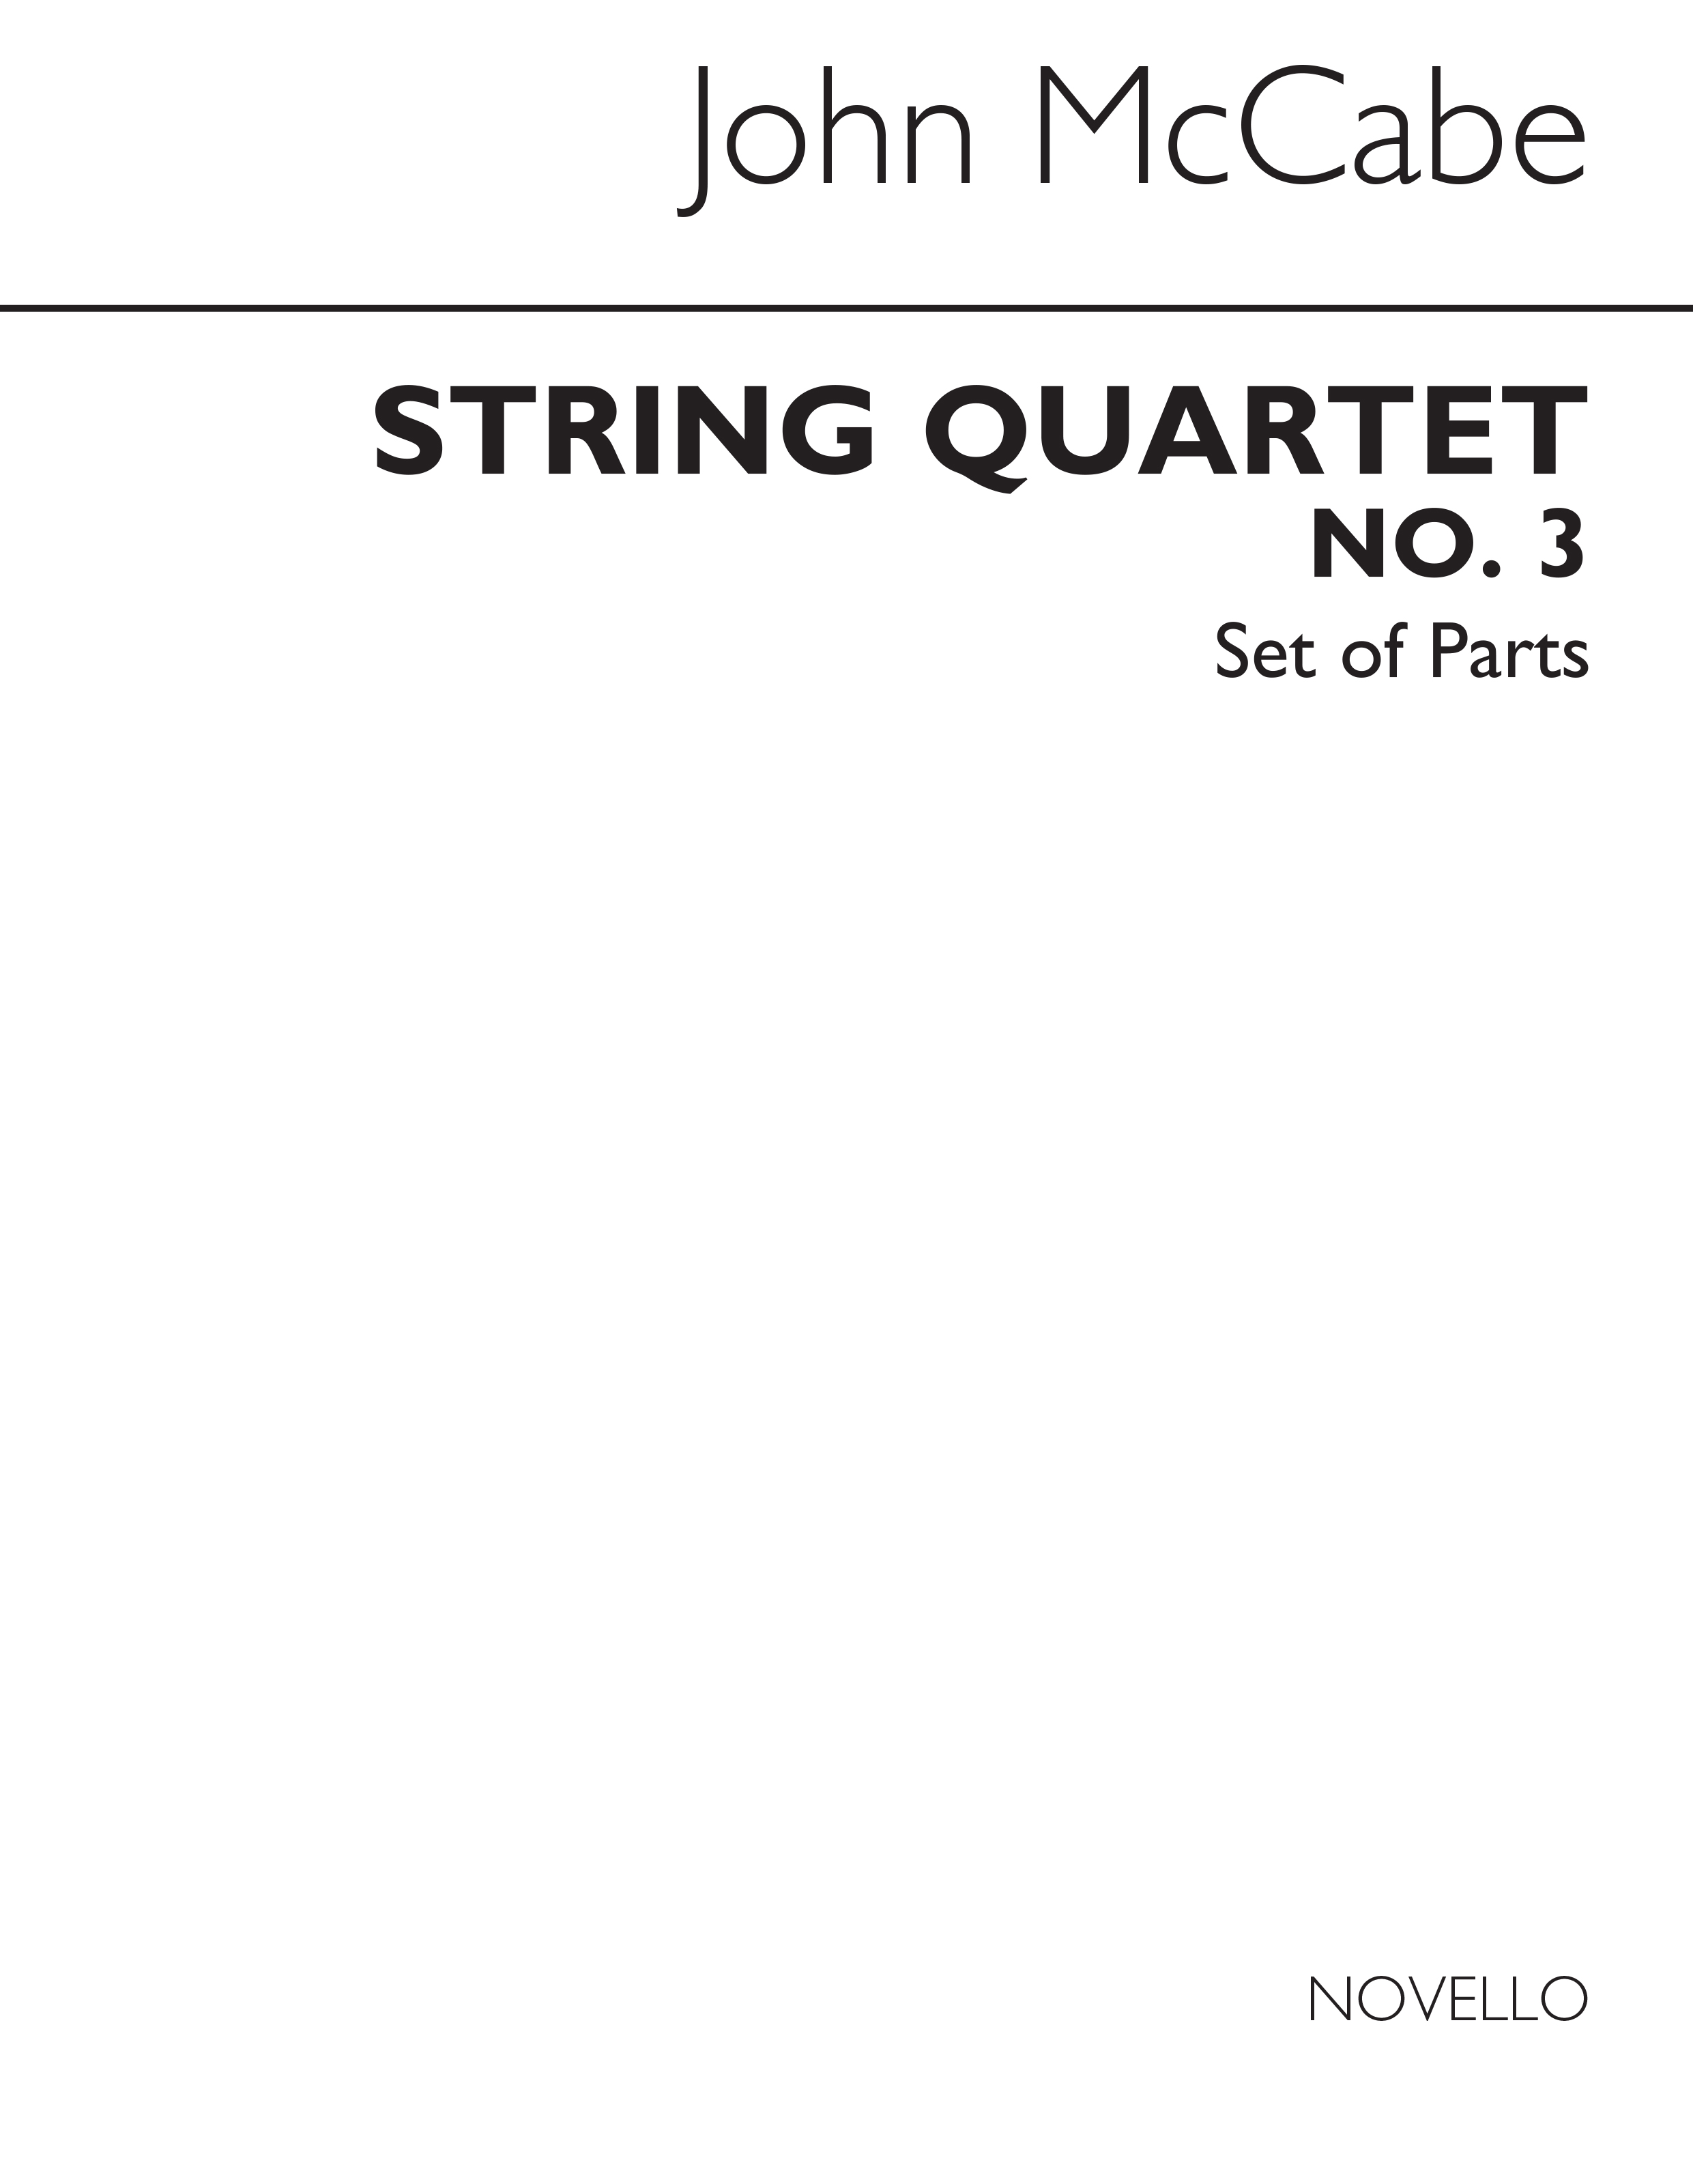 McCabe: String Quartet No.3 (Parts)